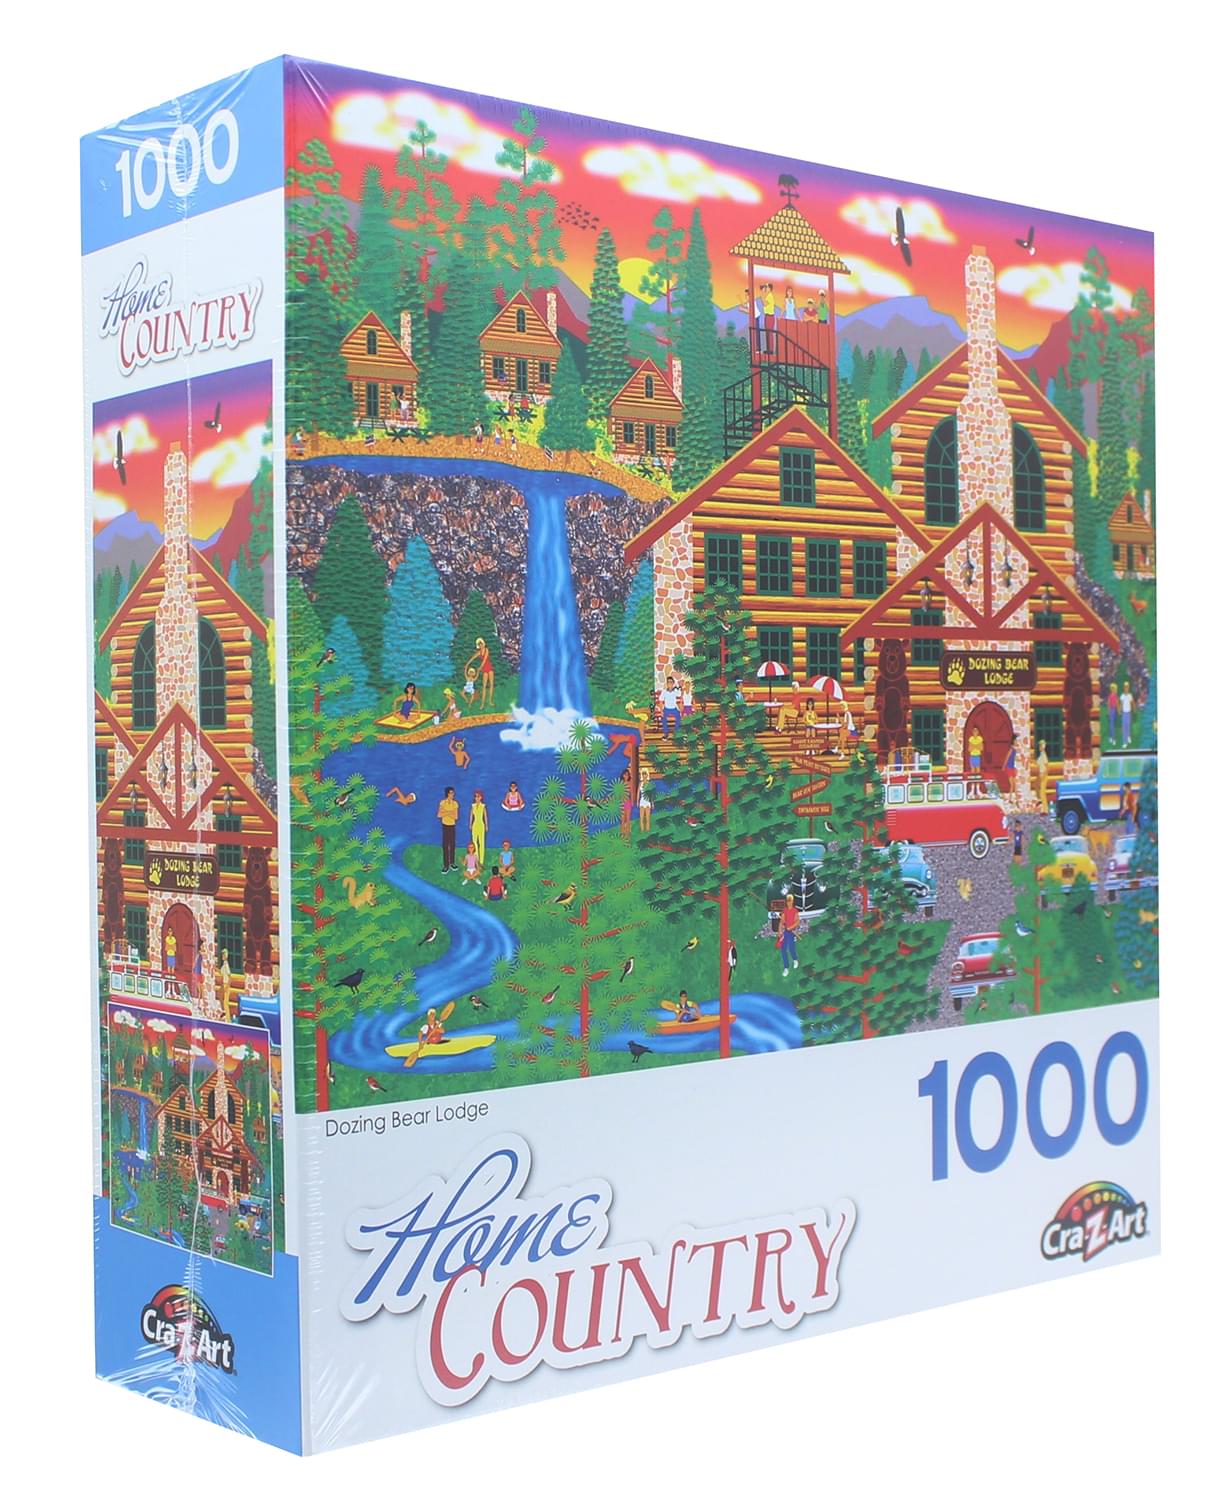 Dozing Bear Lodge 1000 Piece Jigsaw Puzzle